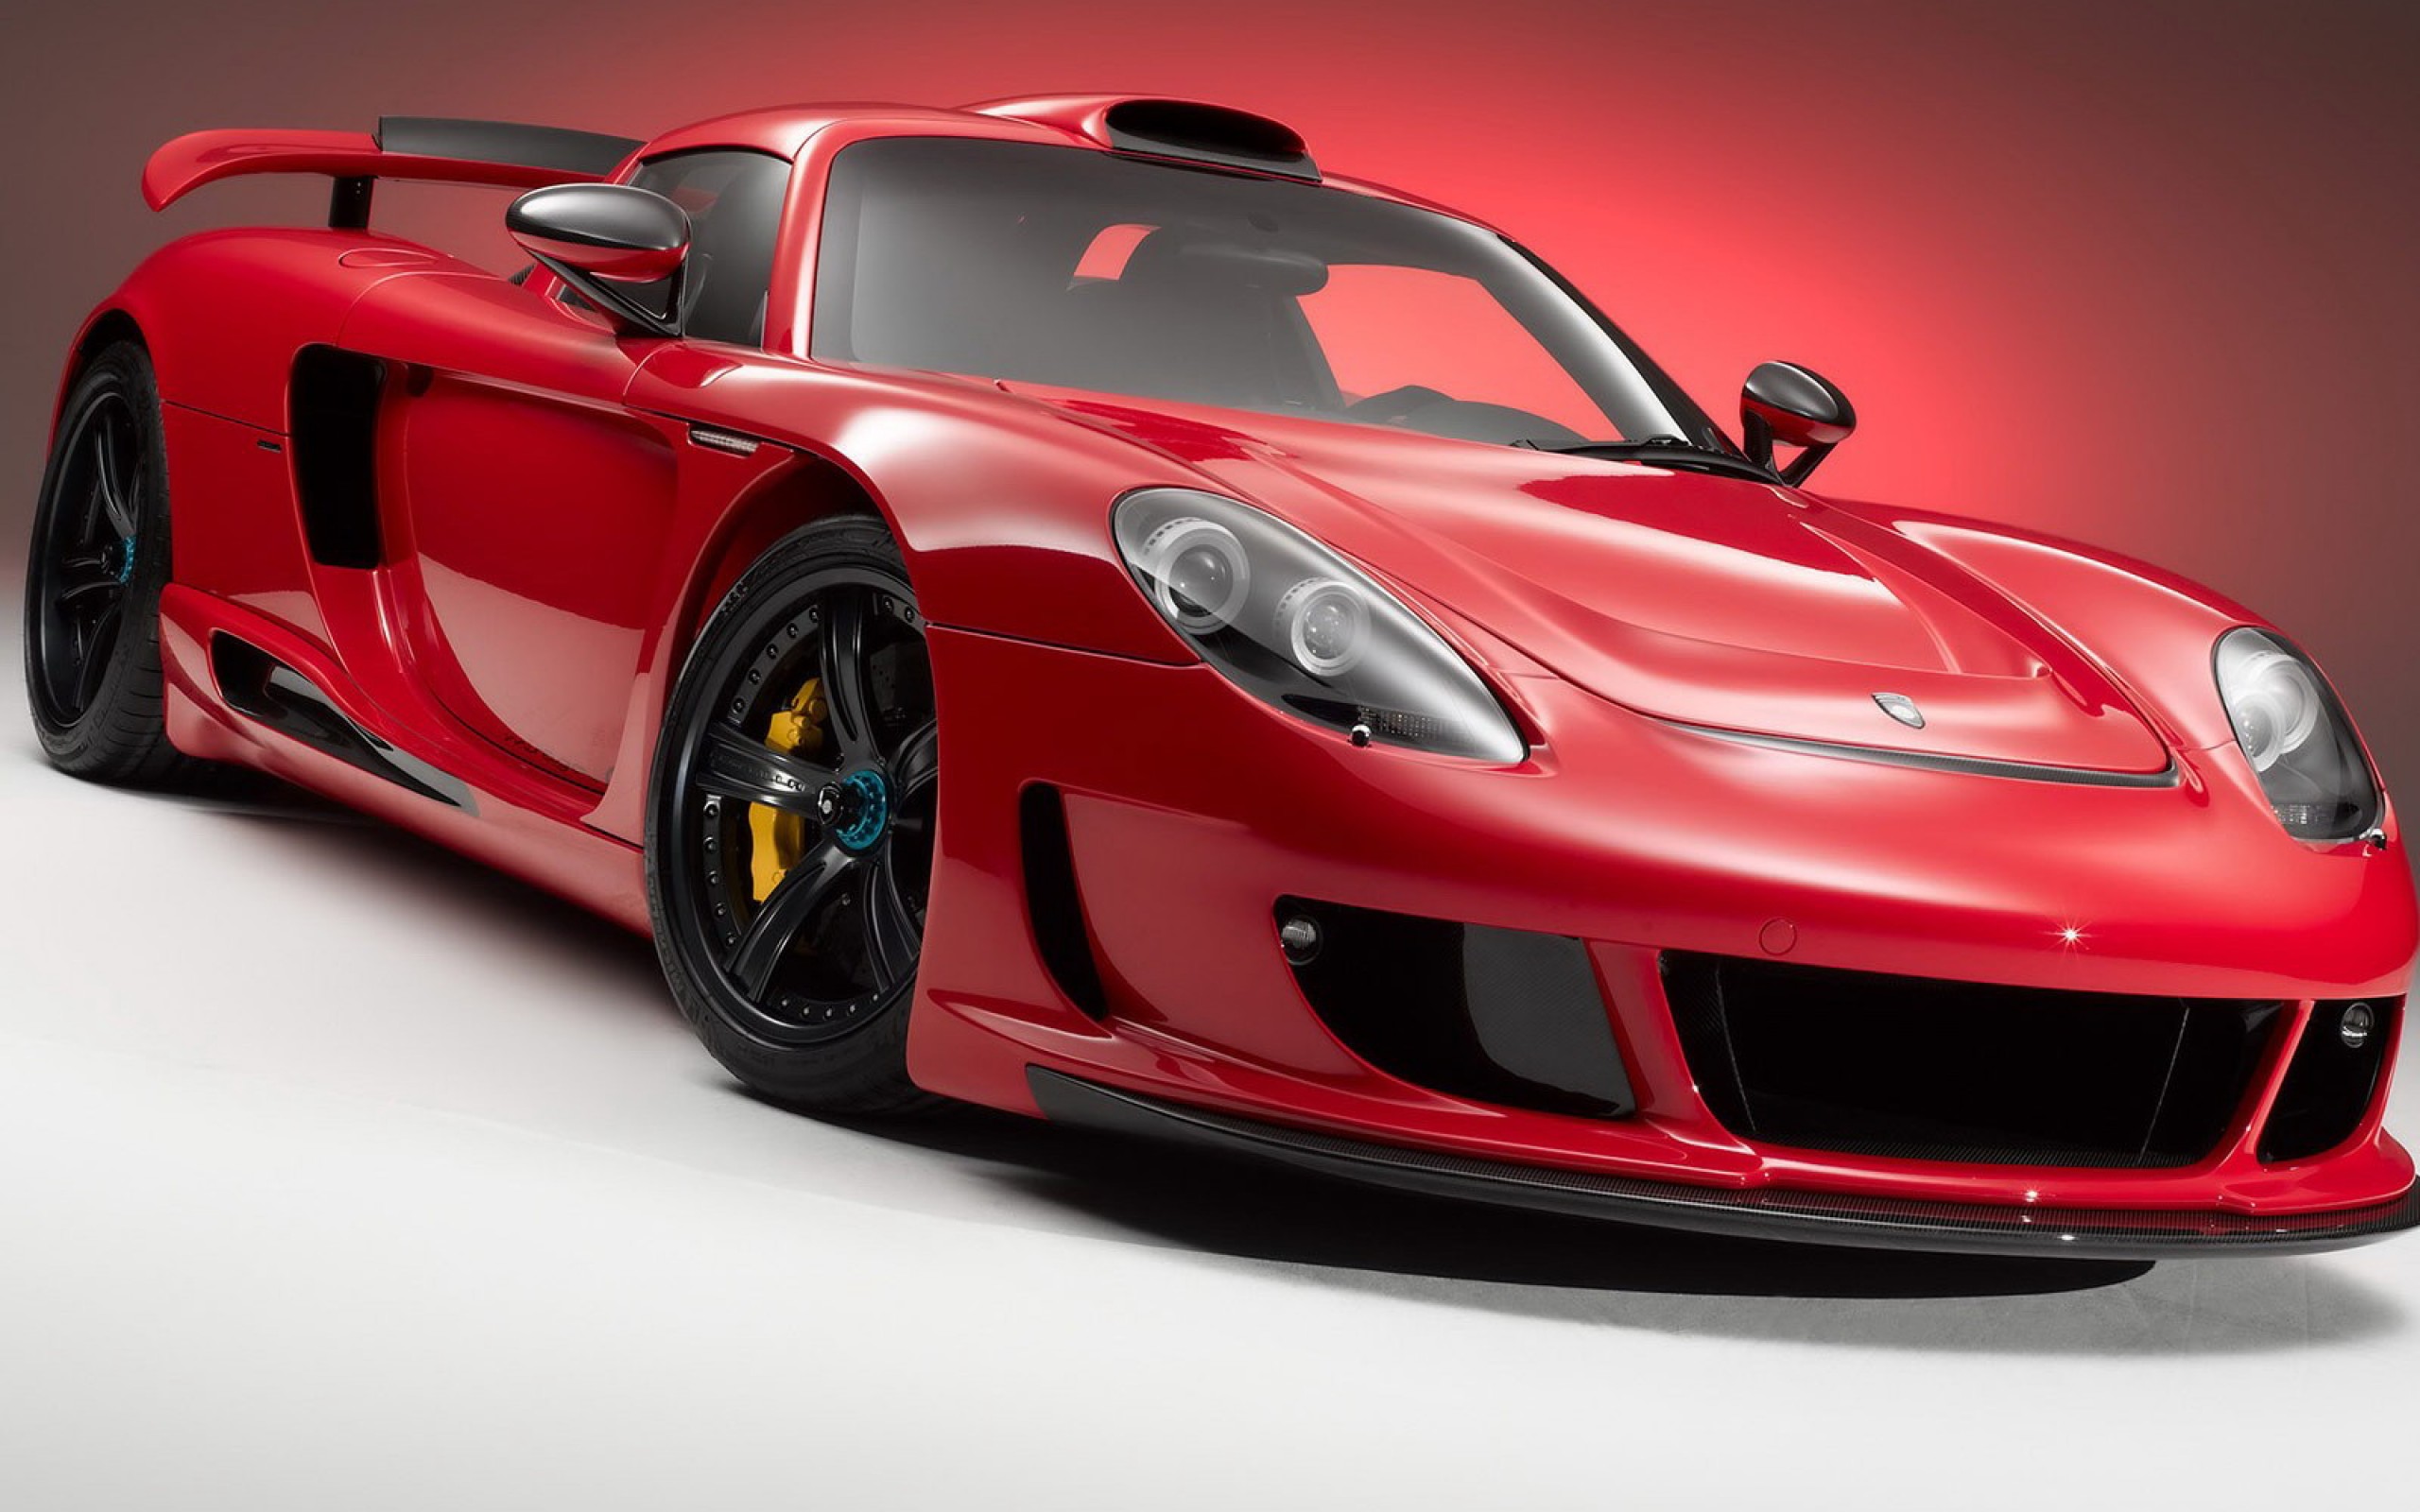 Red Car Hd Background | Wallpapers | Pinterest | Cars, Ferrari car ...